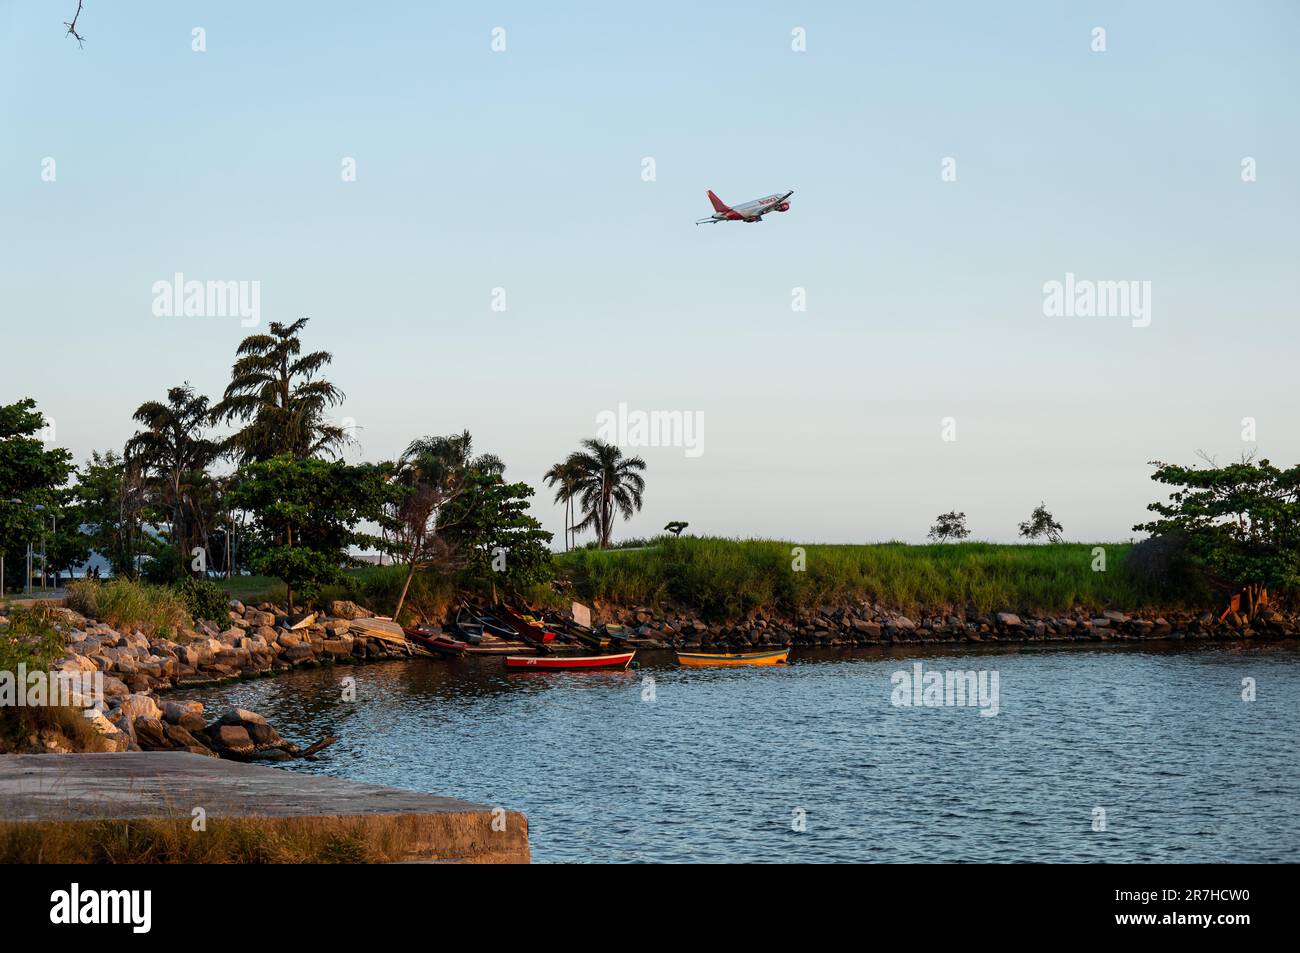 Vista parziale del molo di Santos Dumont Rock (Pier de Pedra) vicino all'aeroporto Santos Dumont, mentre un aereo di linea Avianca sale sotto il cielo blu estivo pomeridiano. Foto Stock